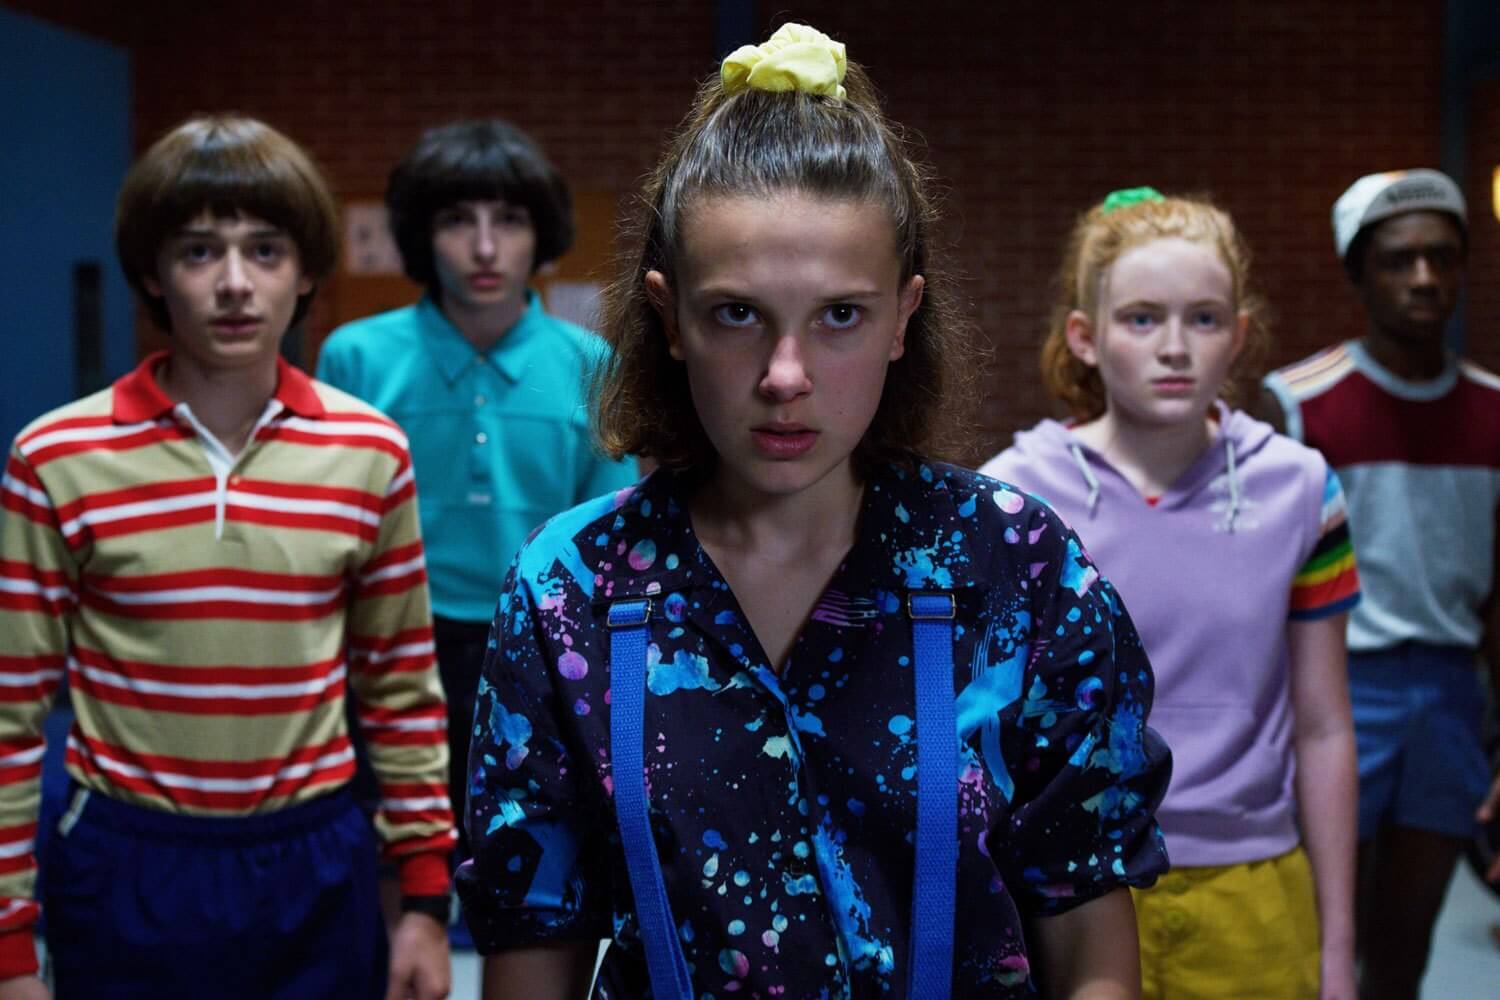 New Stranger Things season breaks Netflix viewing records